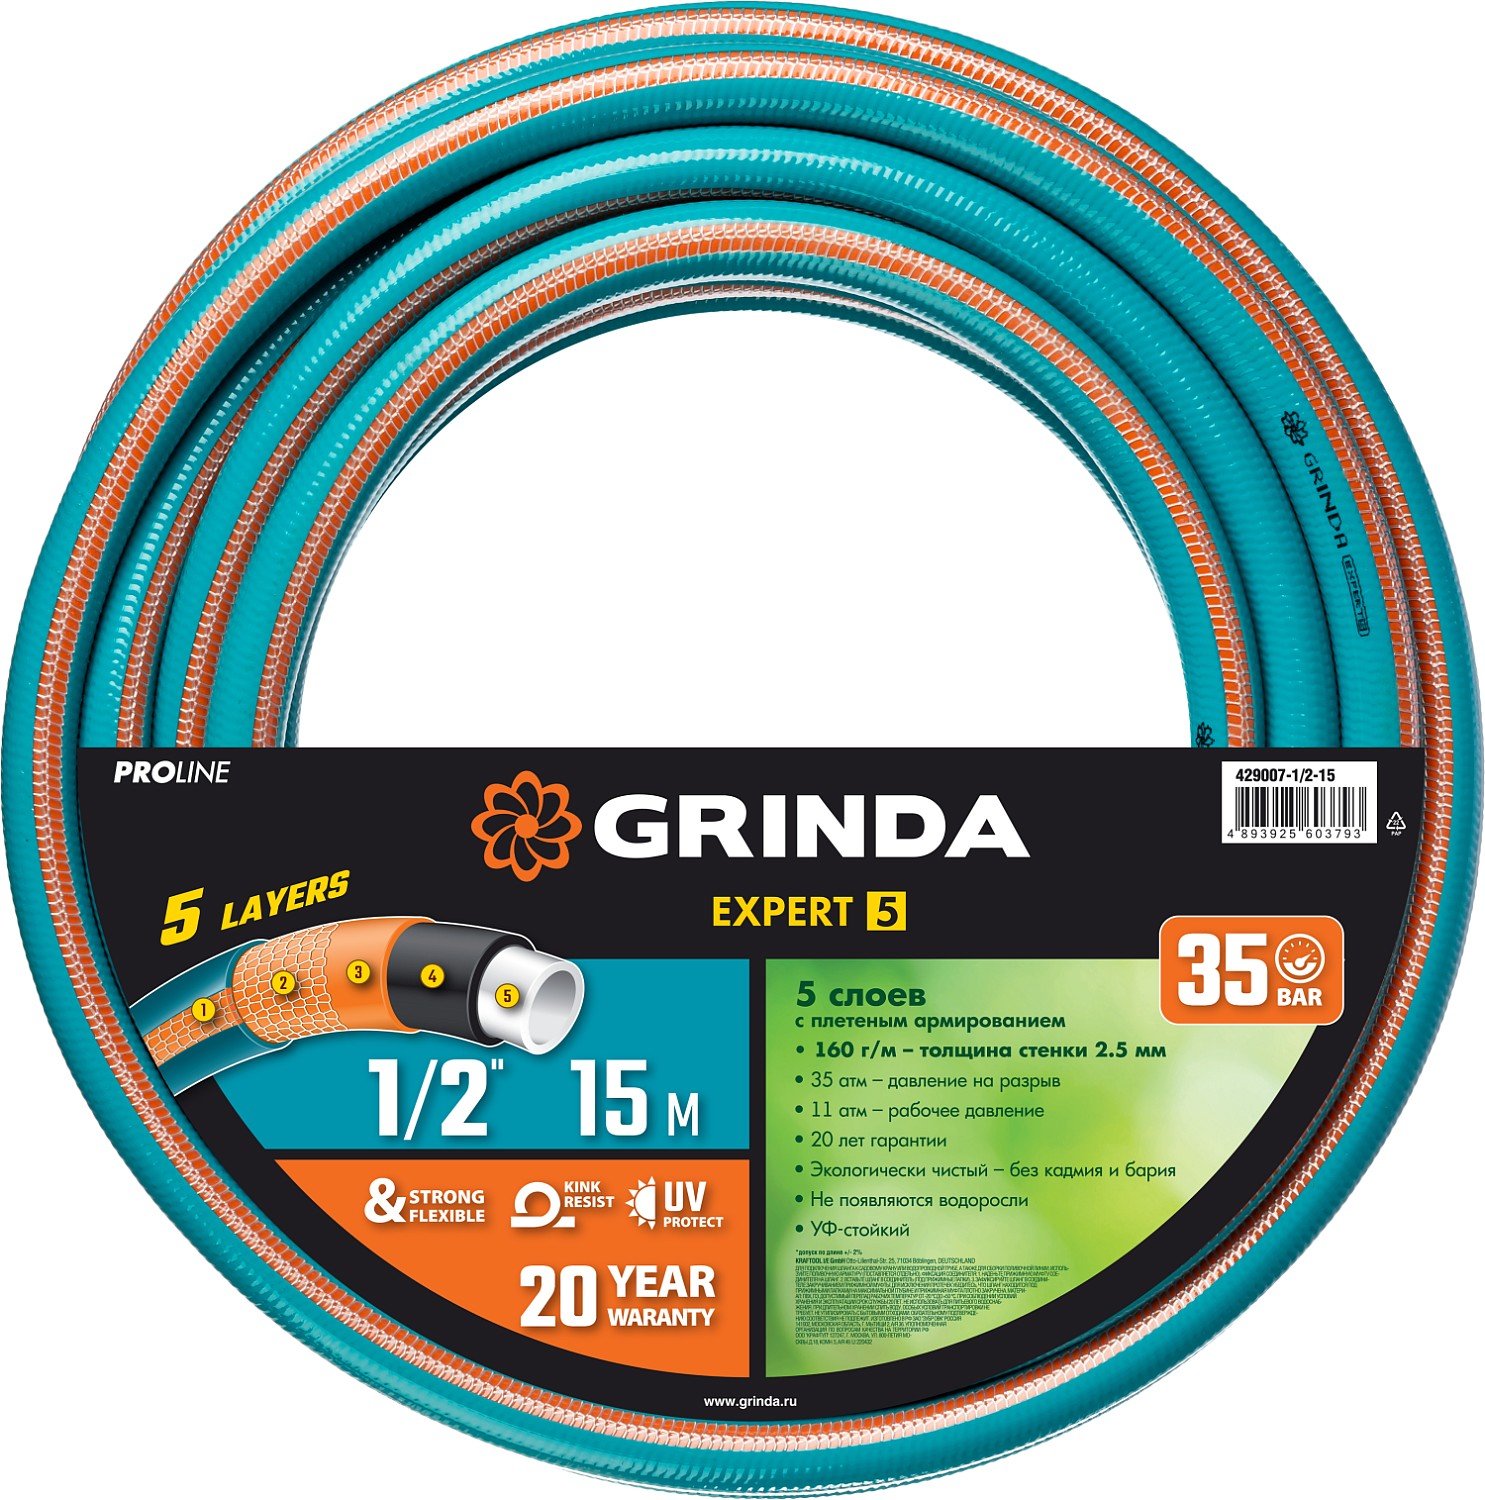   GRINDA PROLine EXPERT 5 1 2 15  35    (429007-1 2-15)